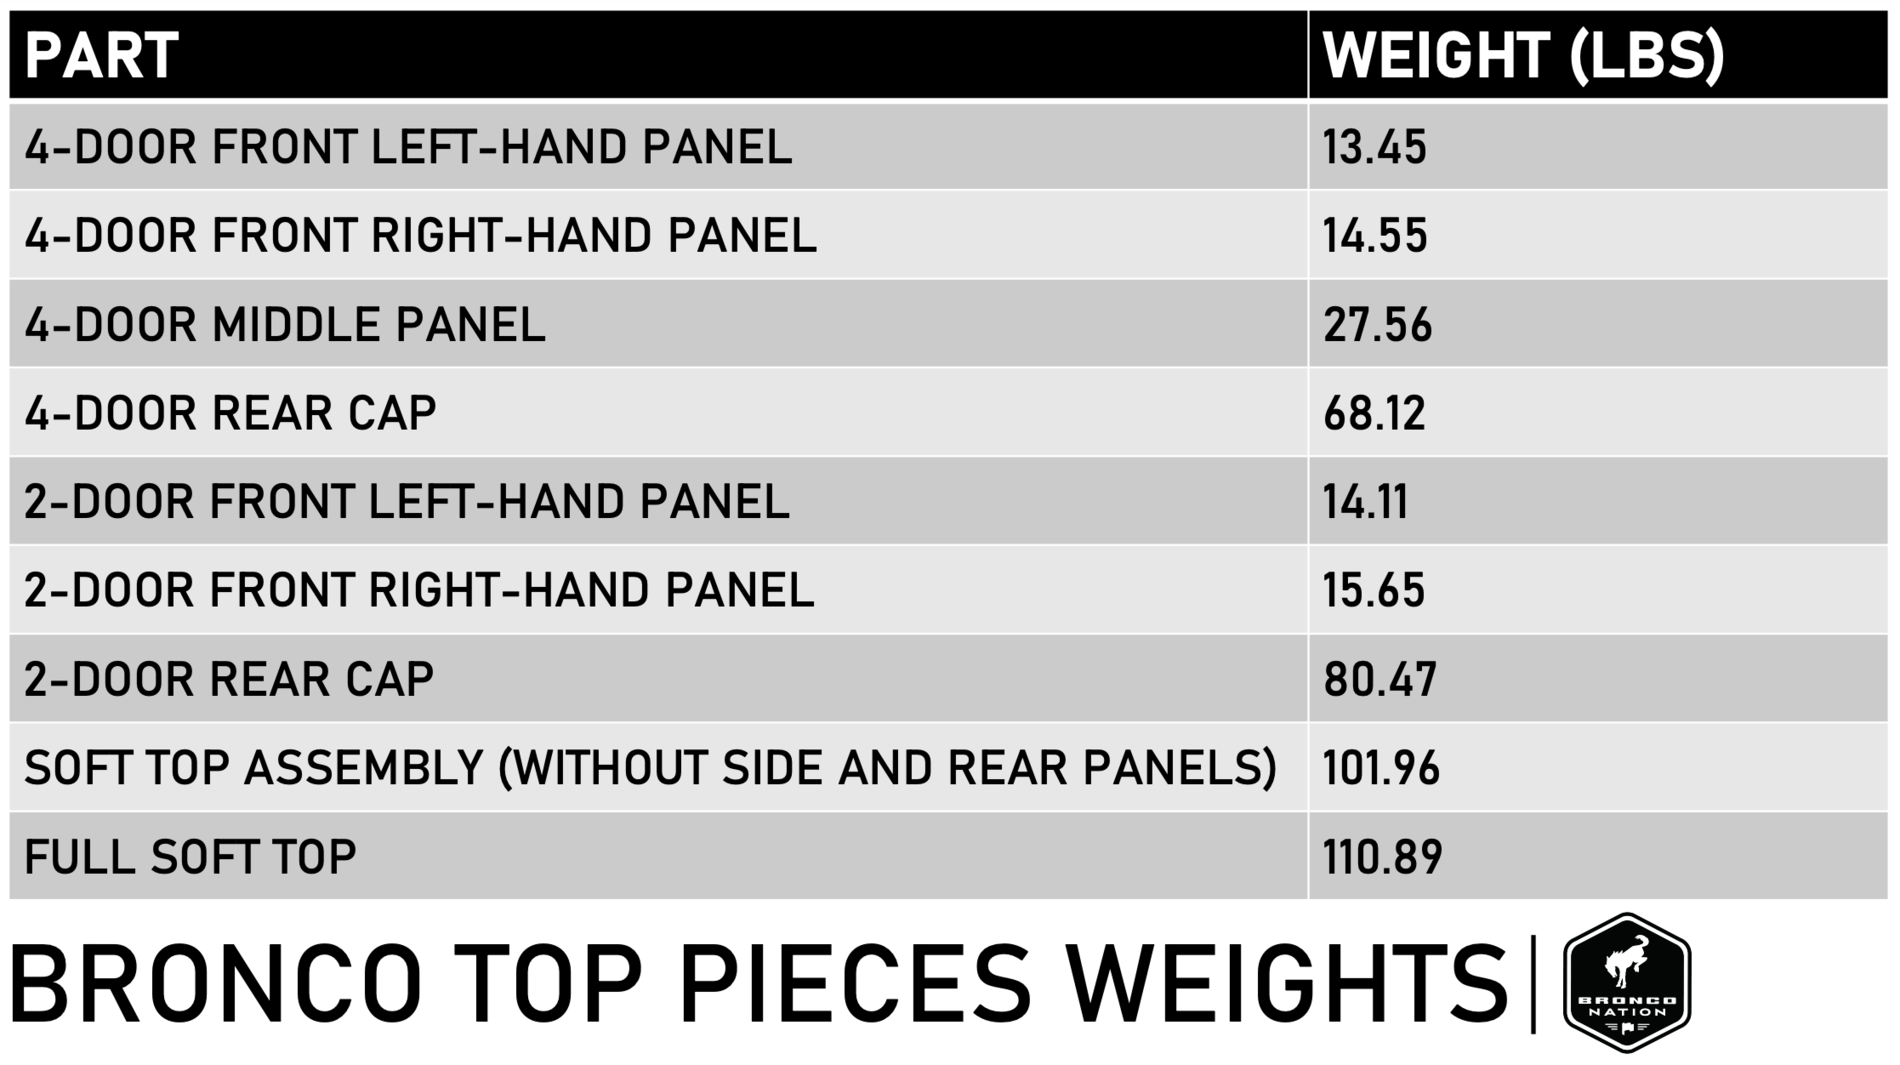 Bronco Weight of the 2021 Bronco Hardtop Panel Pieces and Soft Top 2021 Bronco Hard Top Soft Top weights